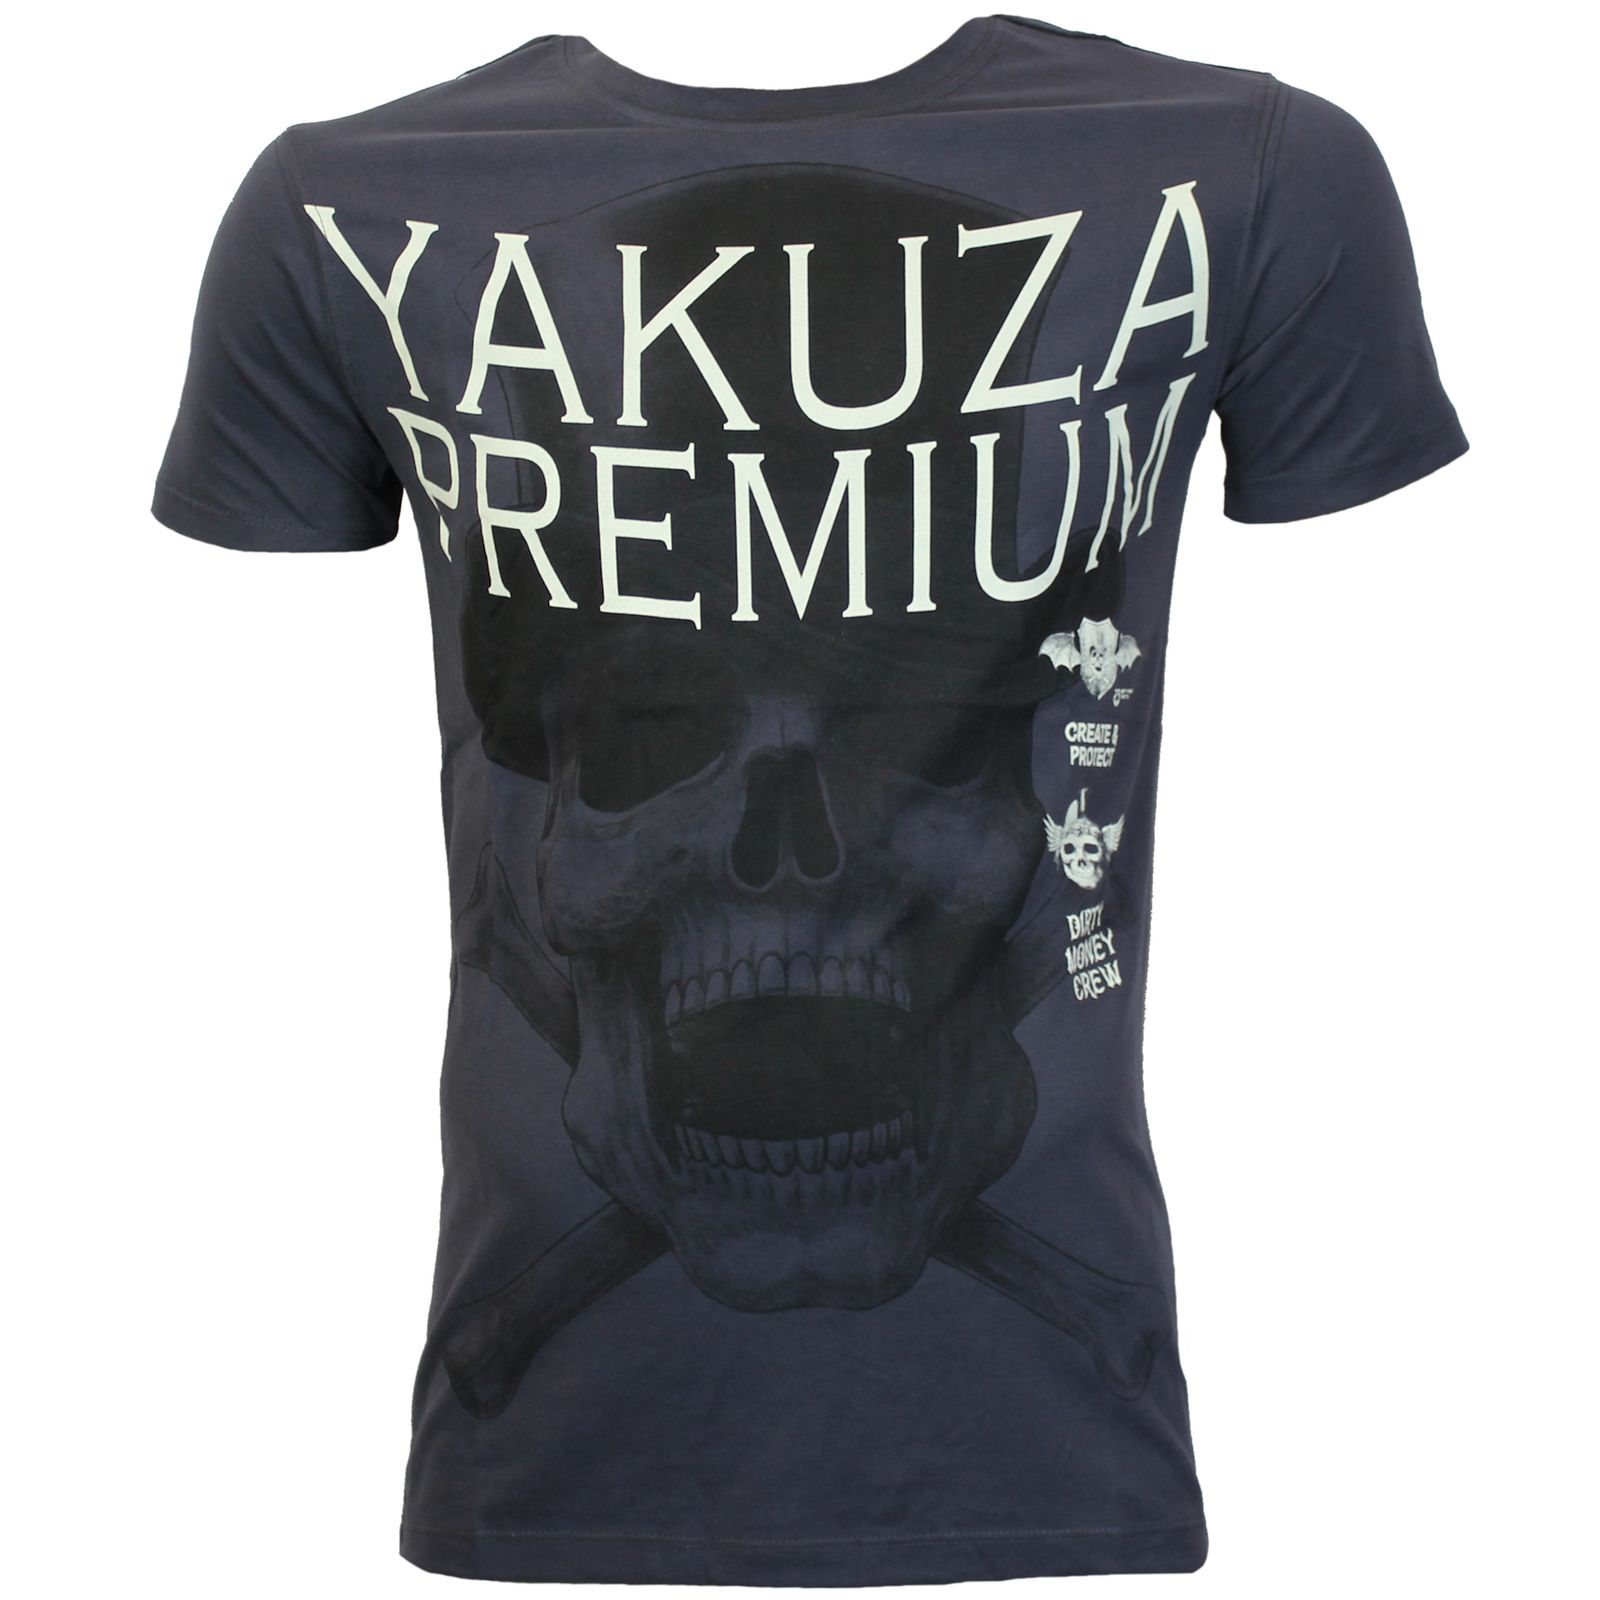 Pánské triko Yakuza Premium 3519 dark grey Velikost: 3XL